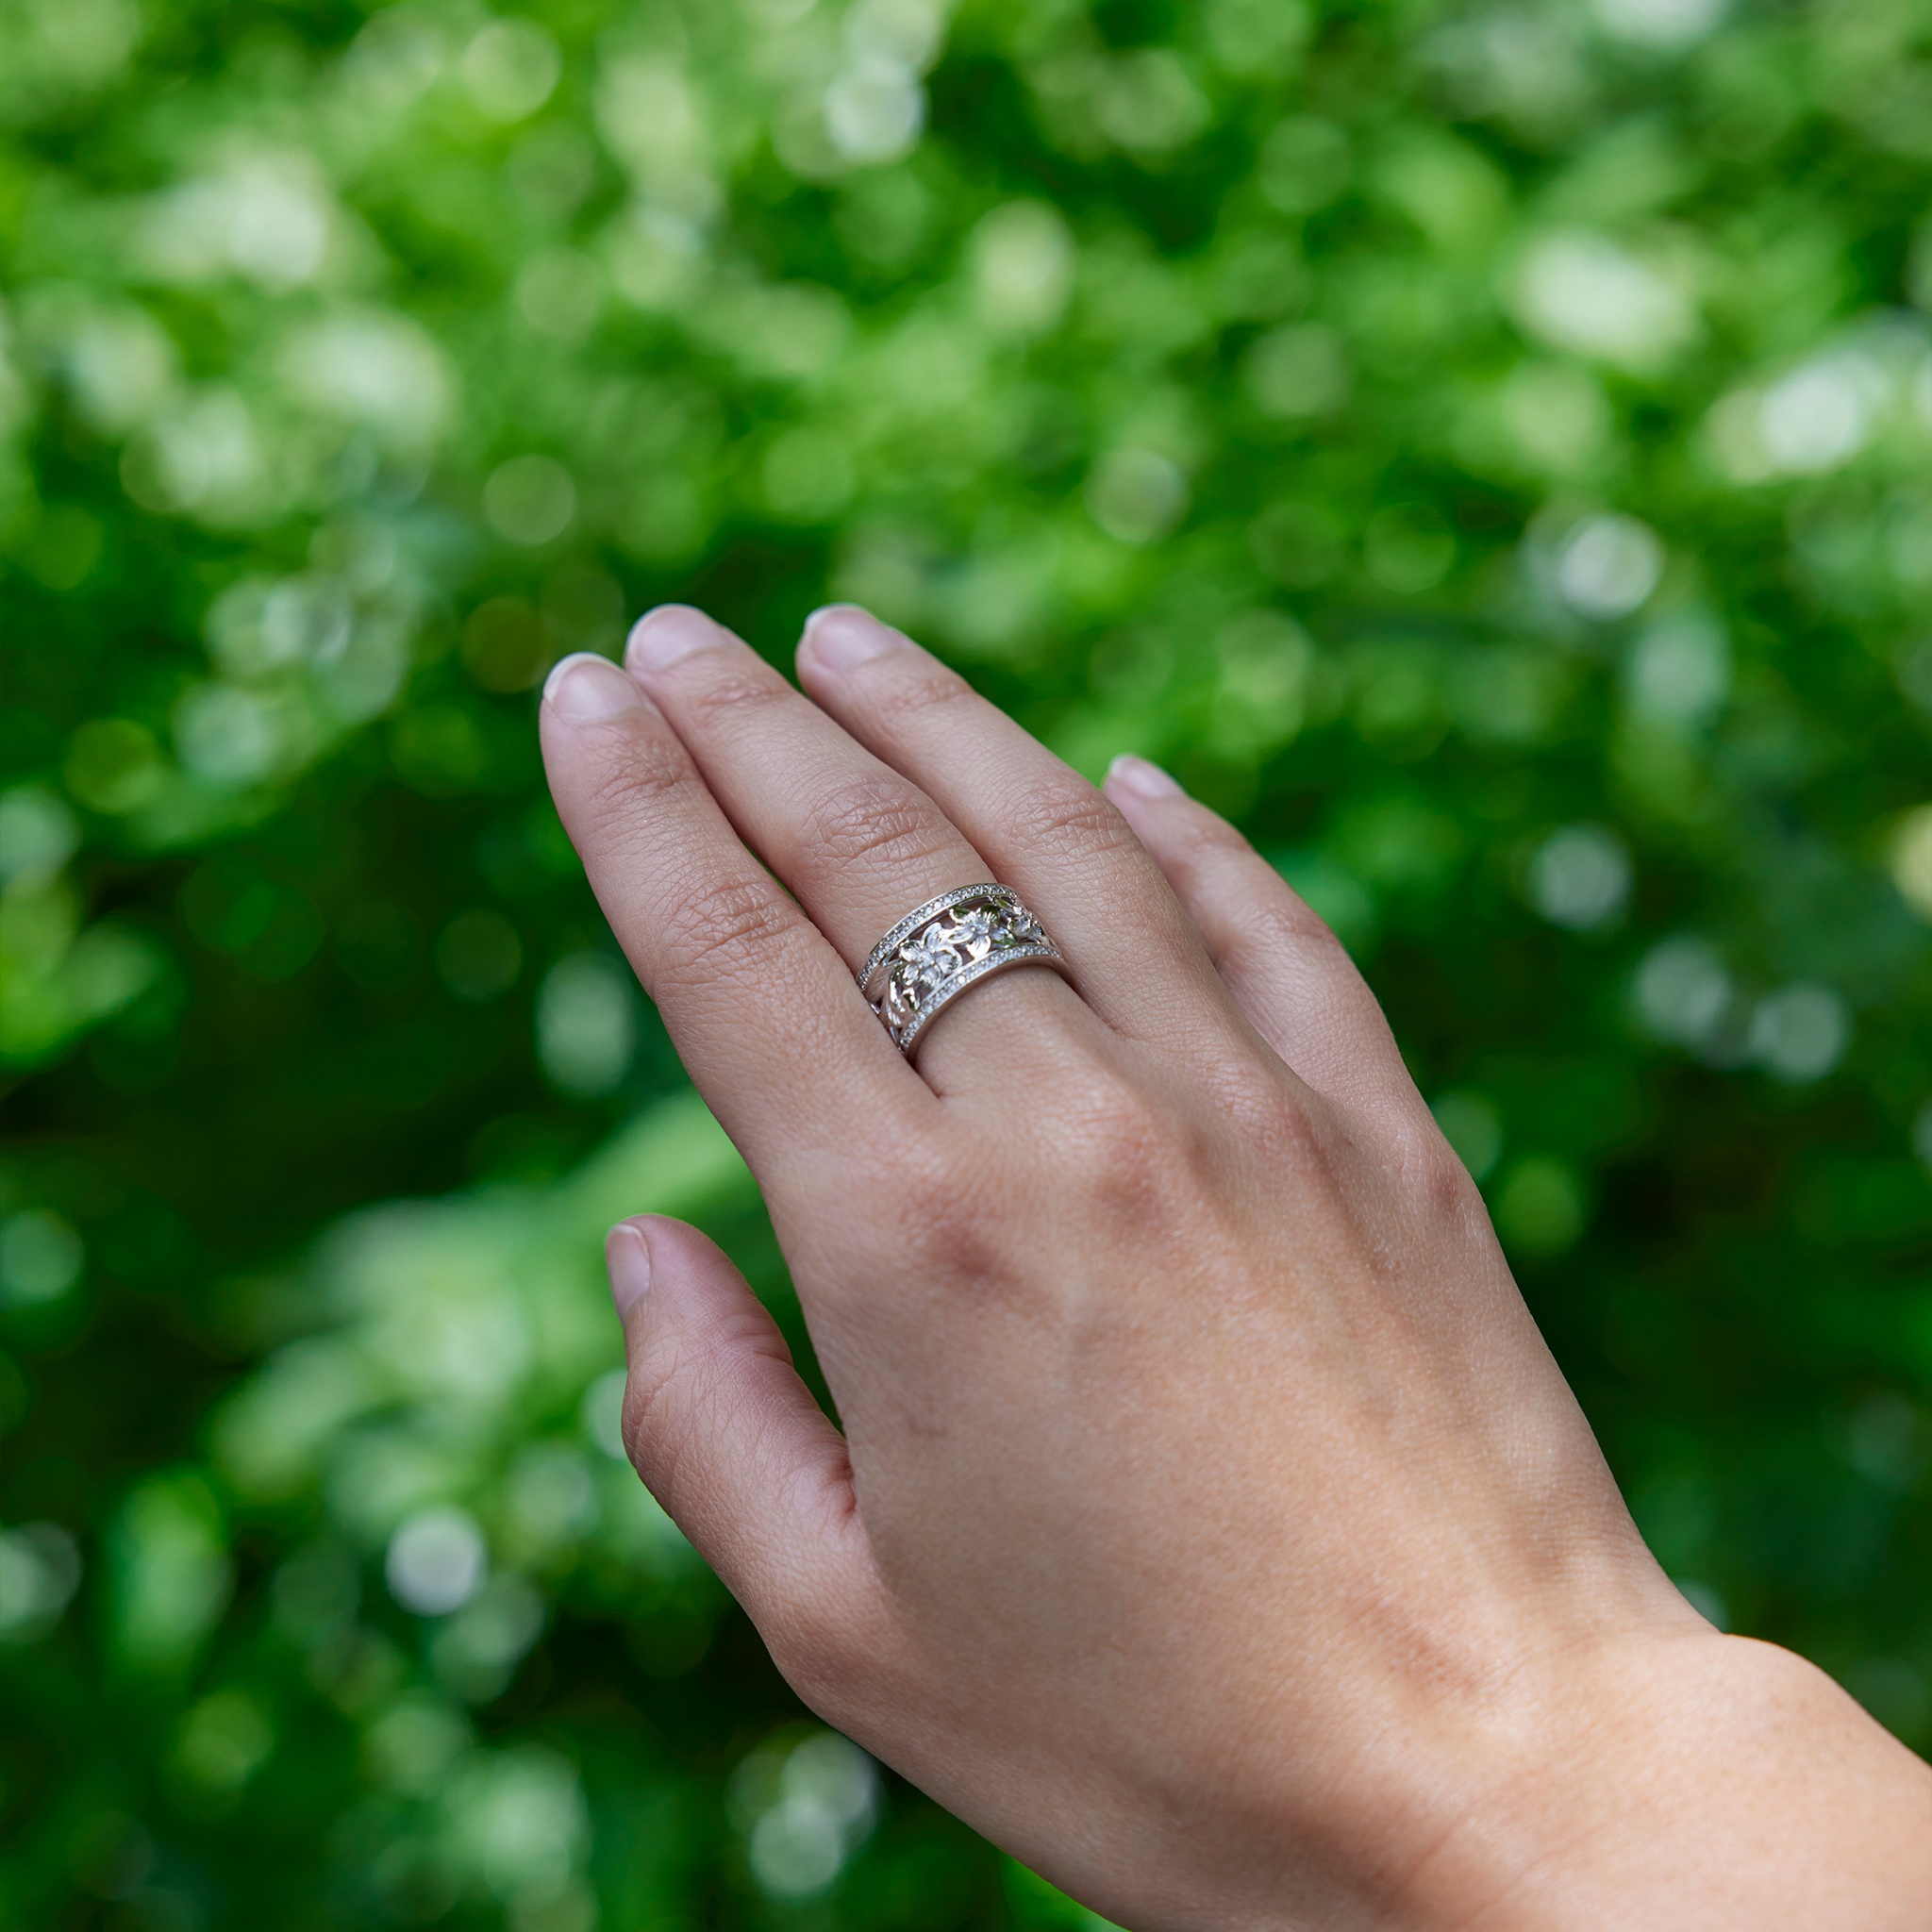 Hawaiian Heirloom Plumeria Ring in White Gold with Diamonds - 10mm